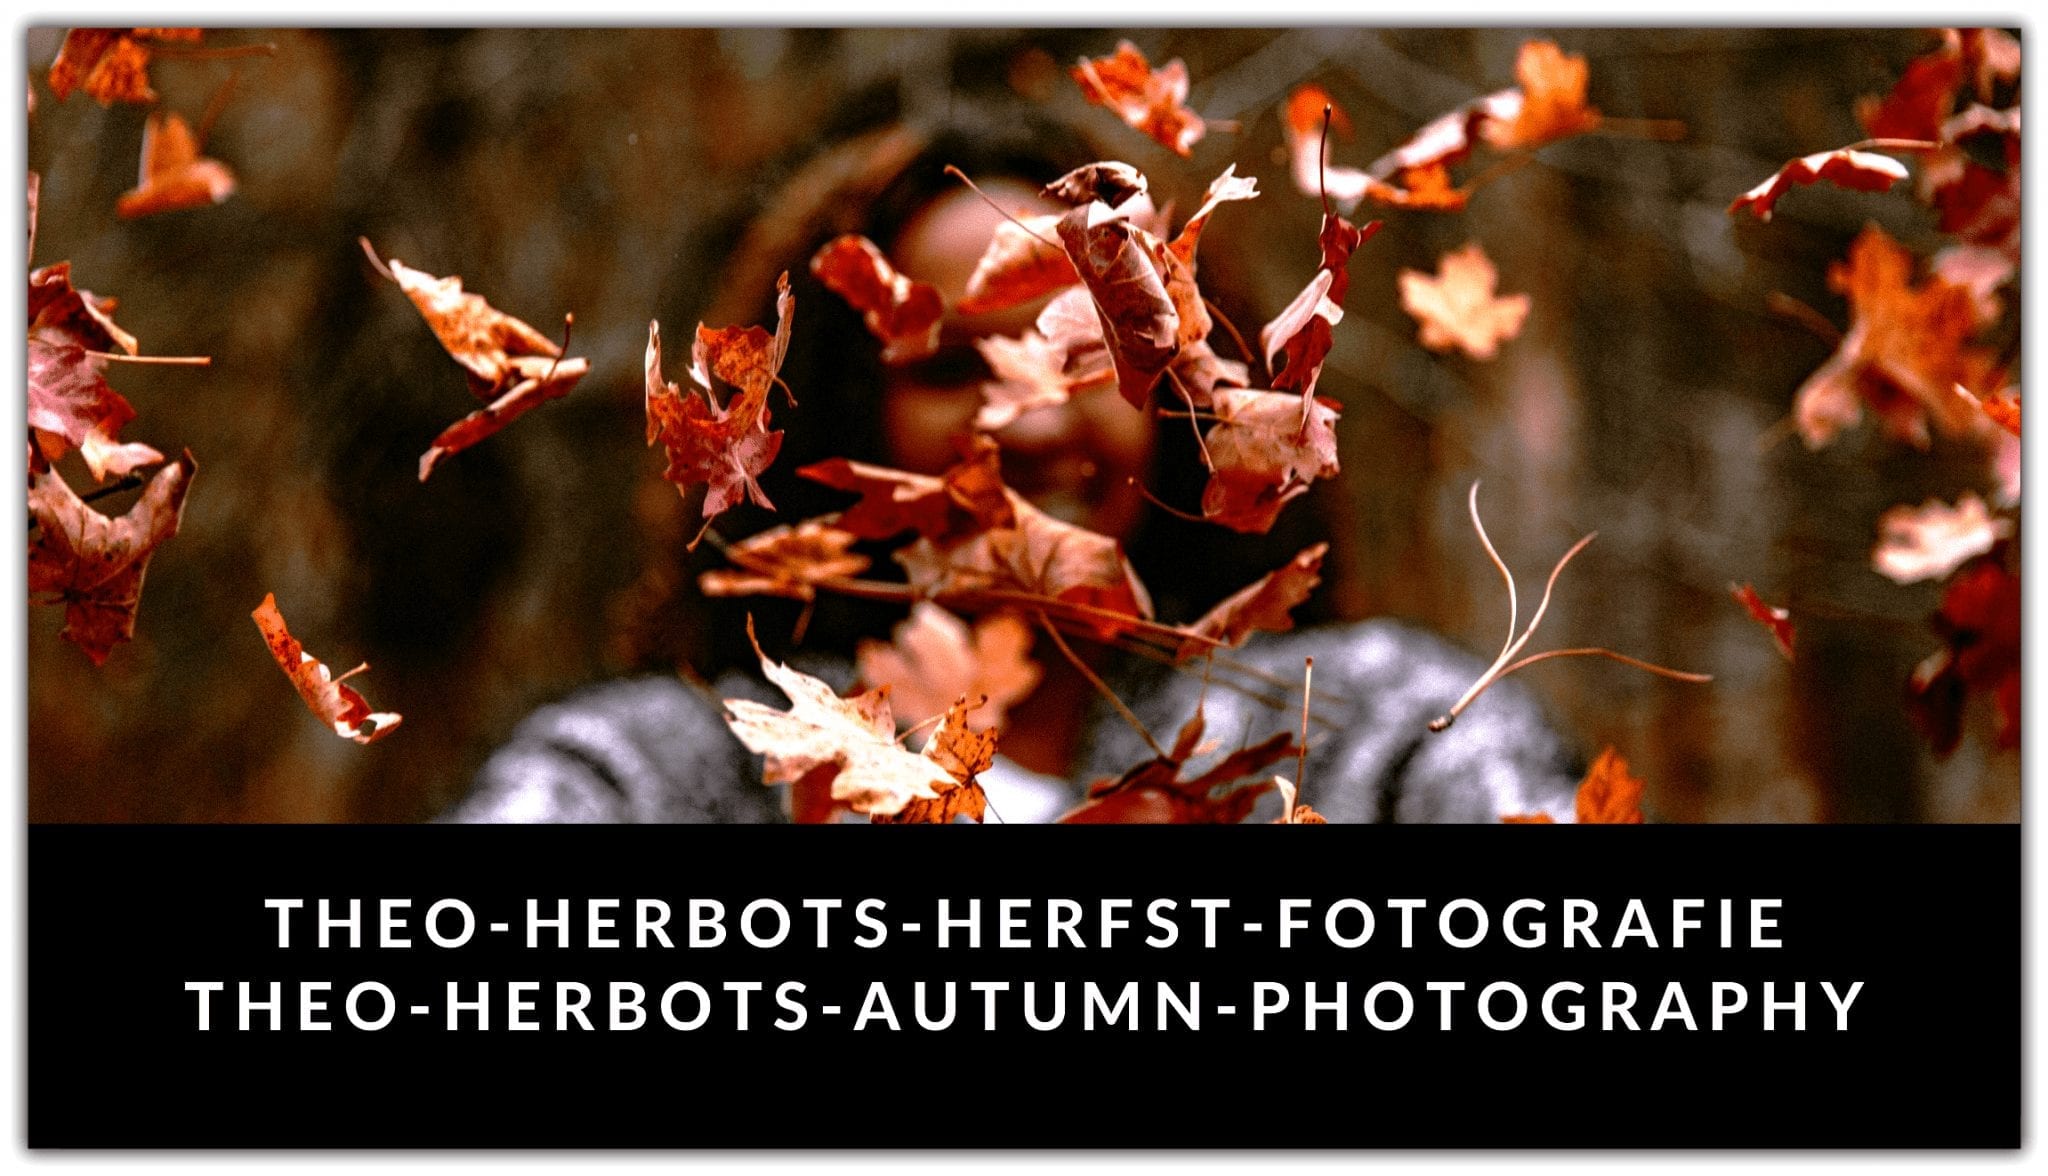 Herfst-Fotografie ||Autumn Photography